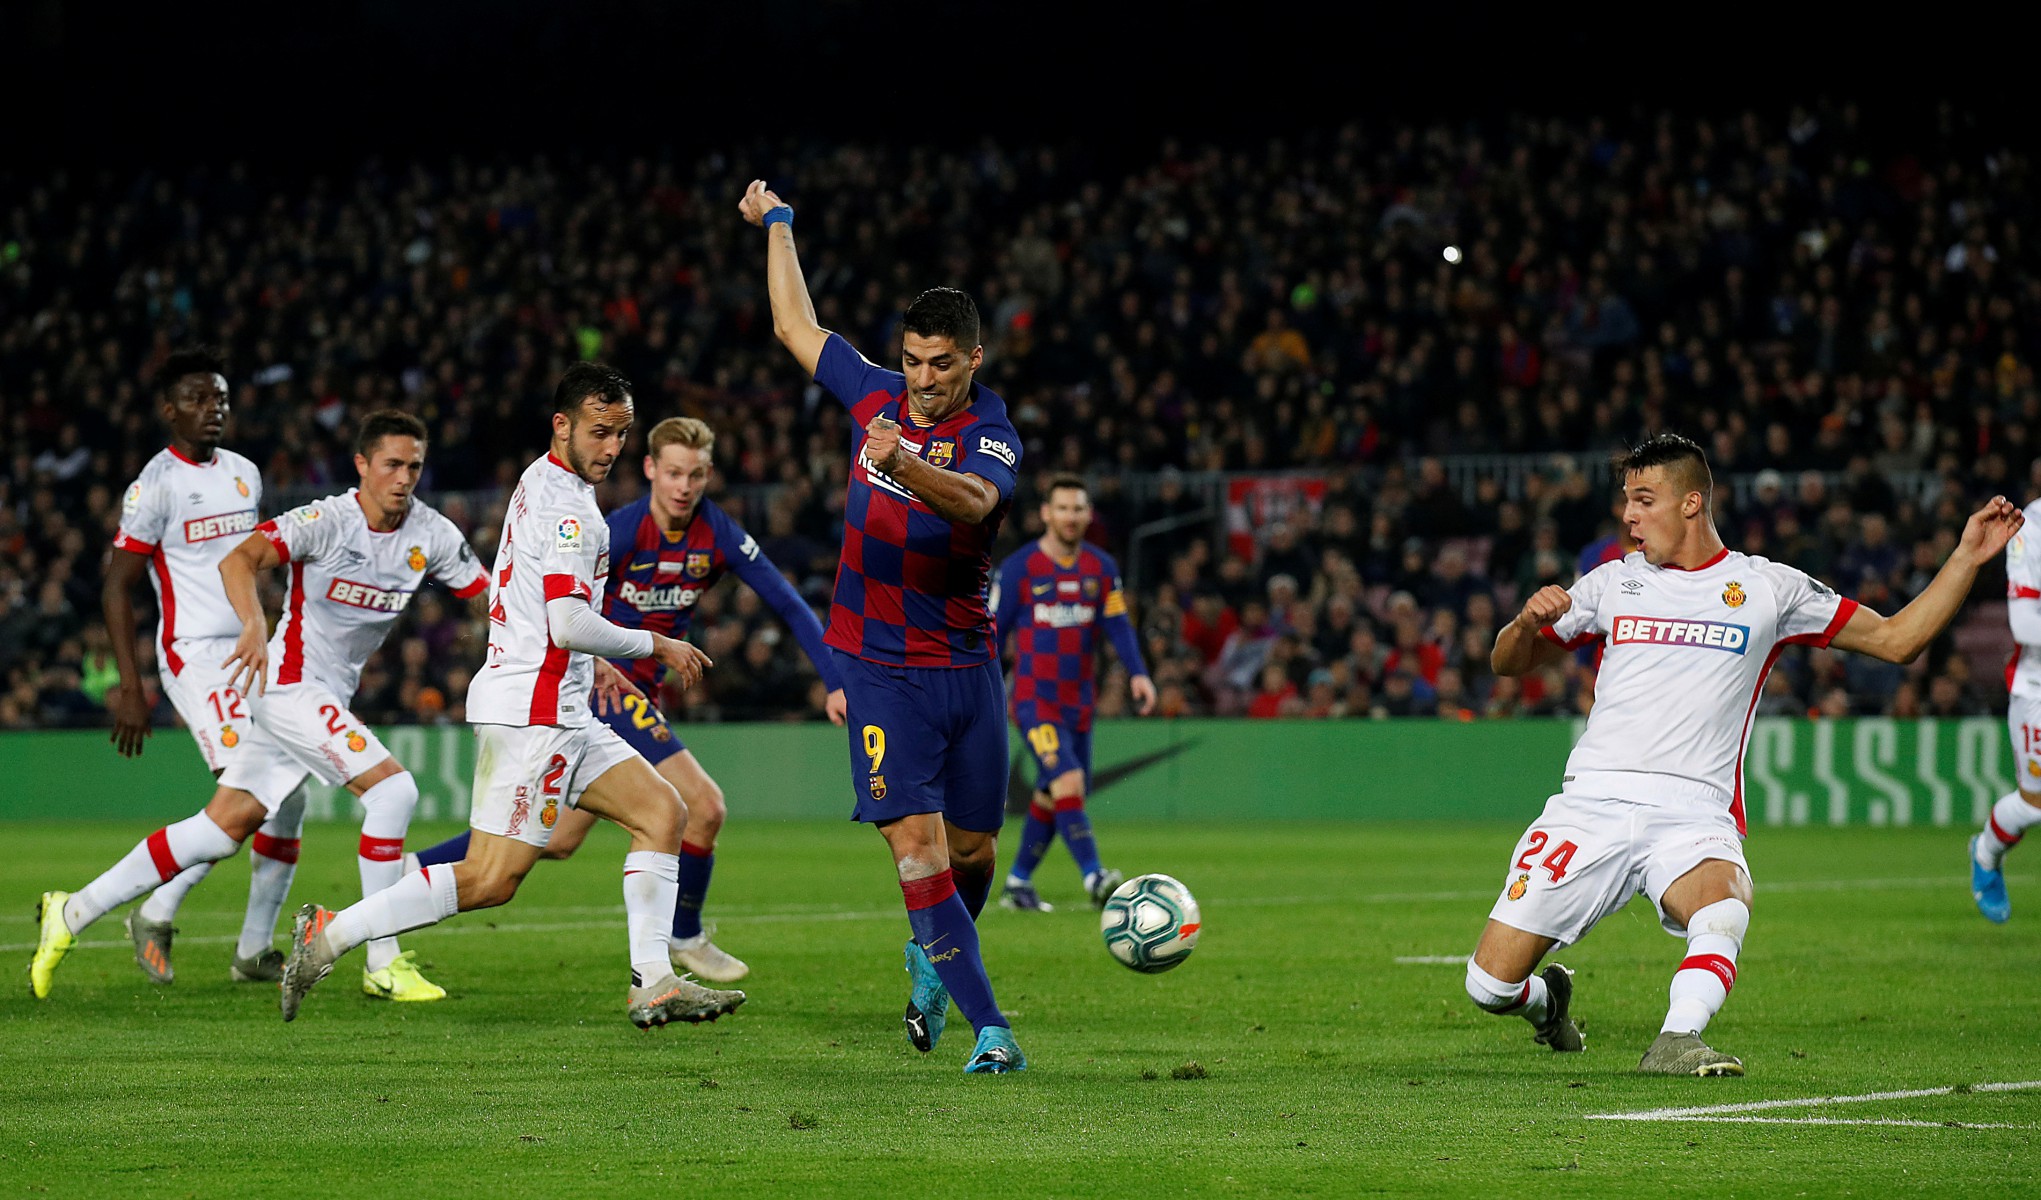 , Watch Luis Suarez score sensational backheel flick goal in Barcelona training proving his wonder goal was no fluke